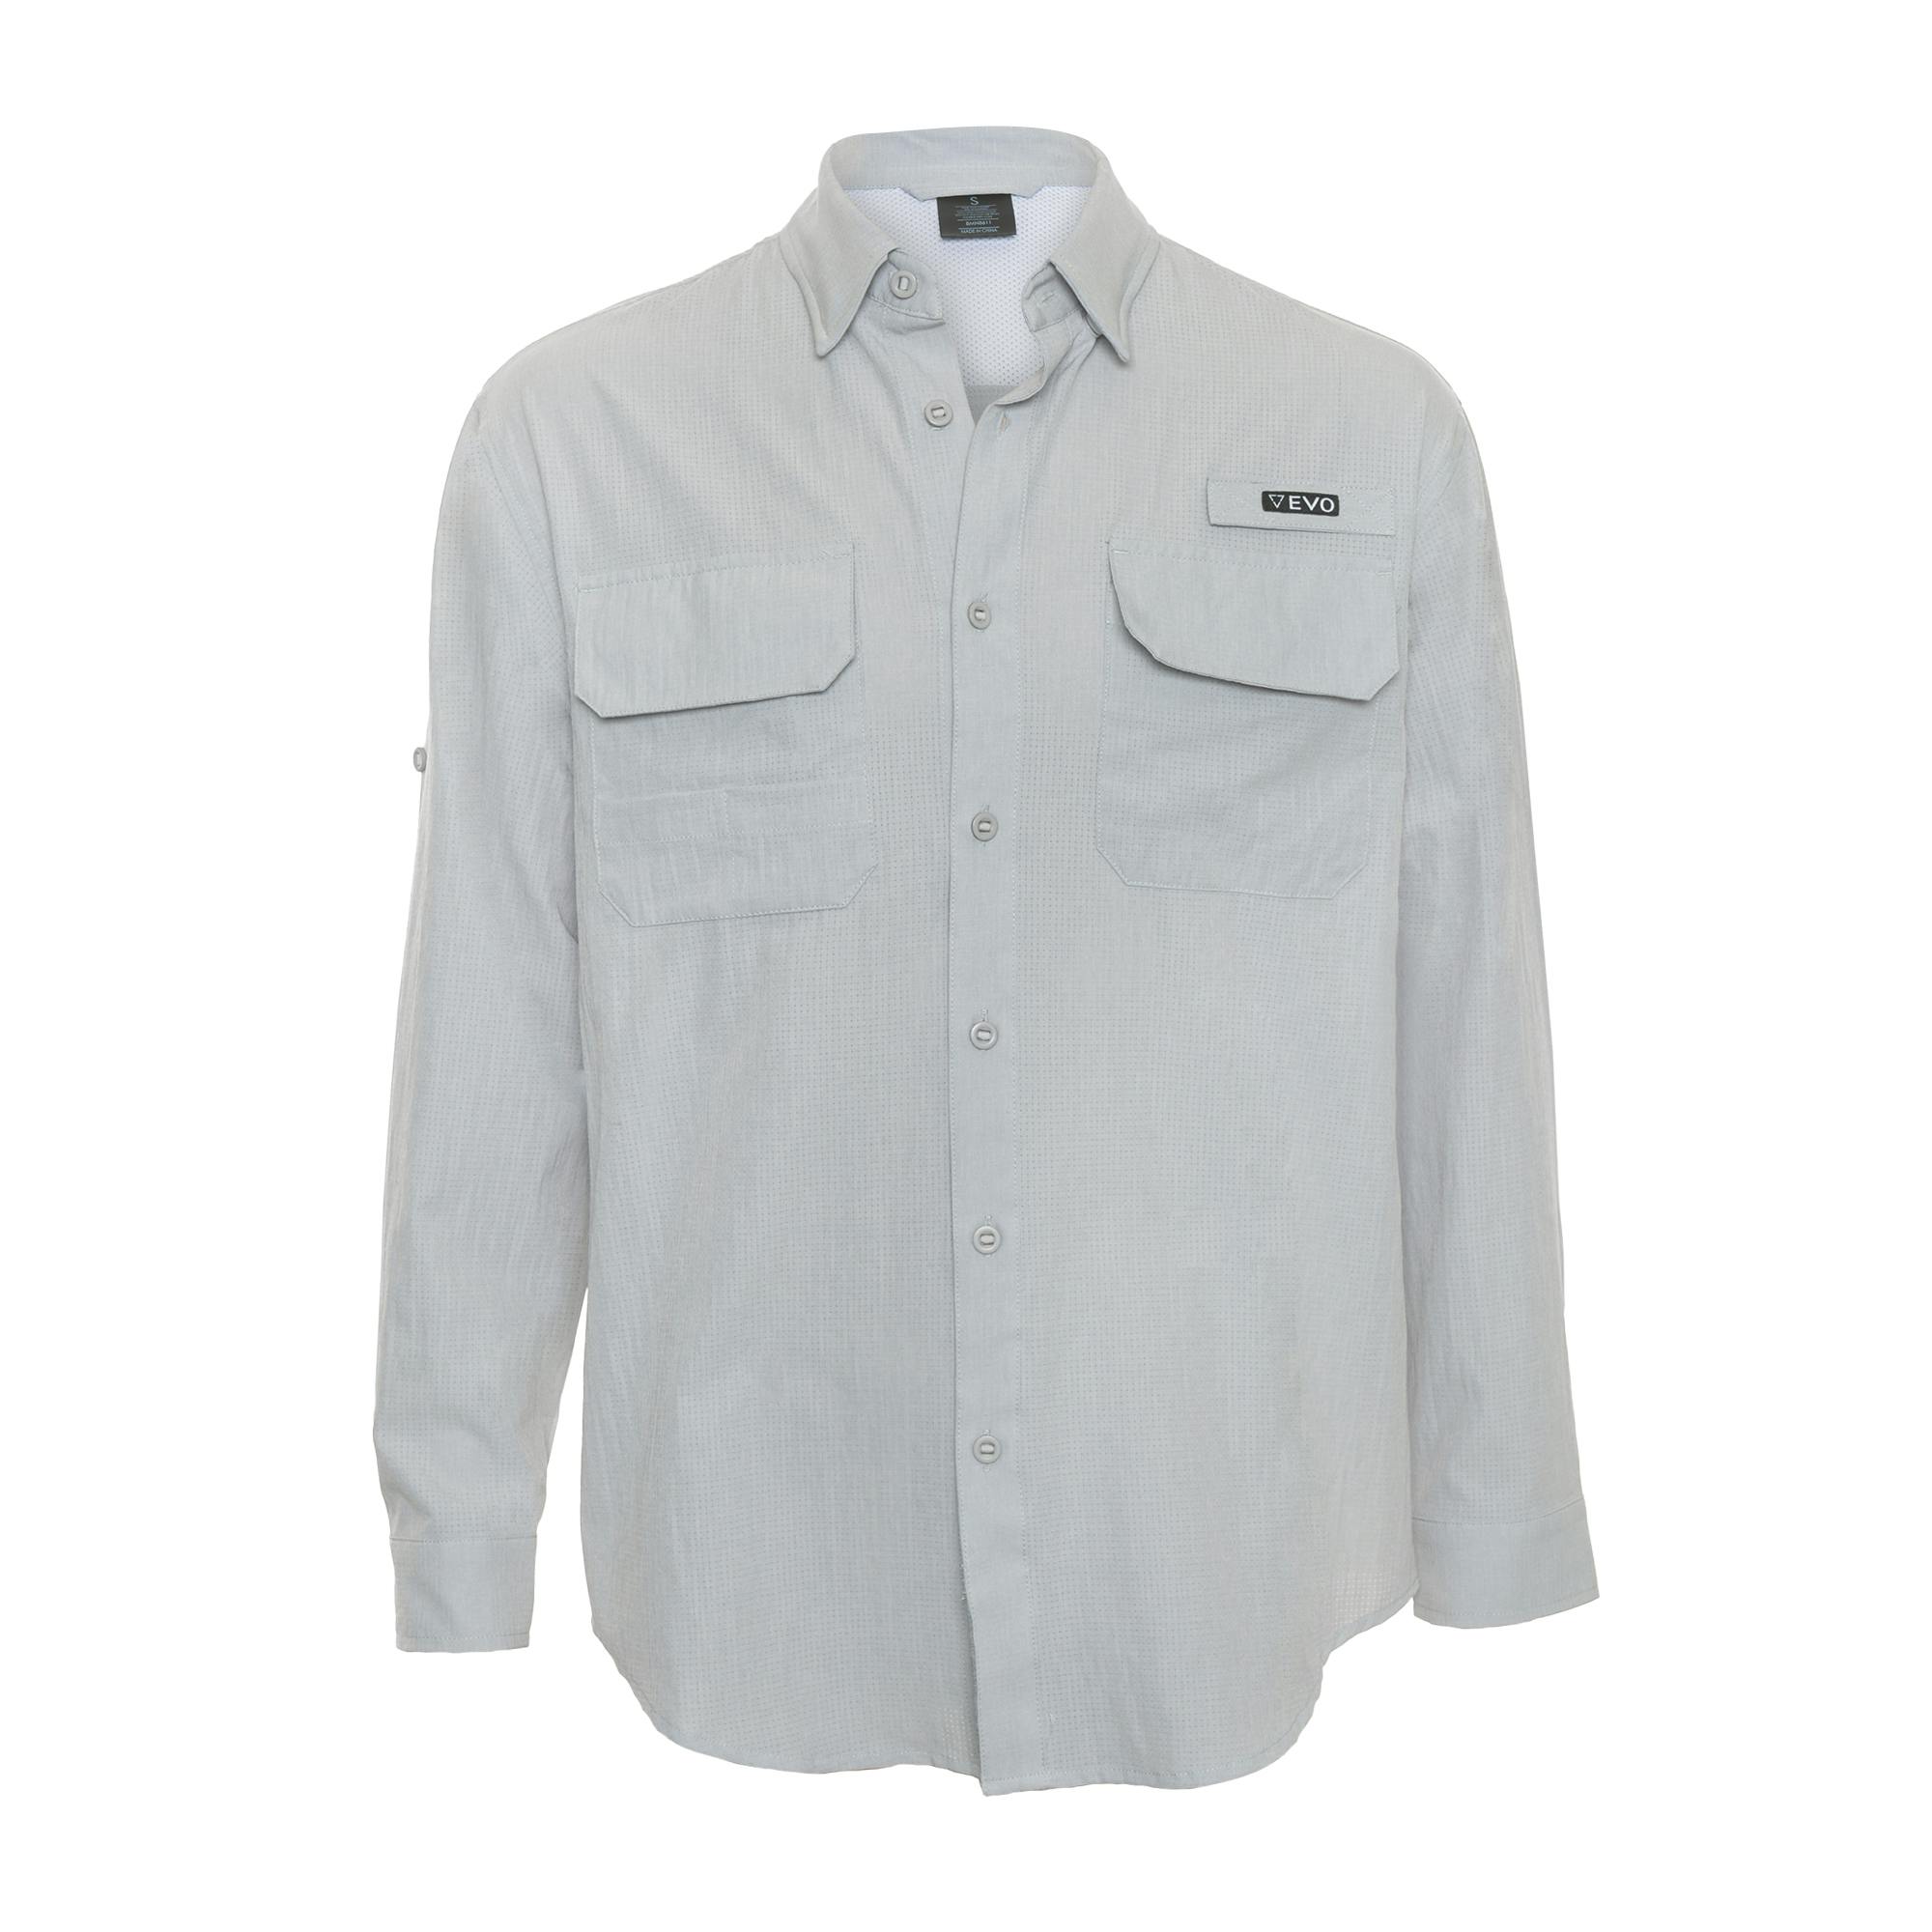 EVO Bimini Long Sleeve Woven Performance Shirt (Men’s) - Light Grey